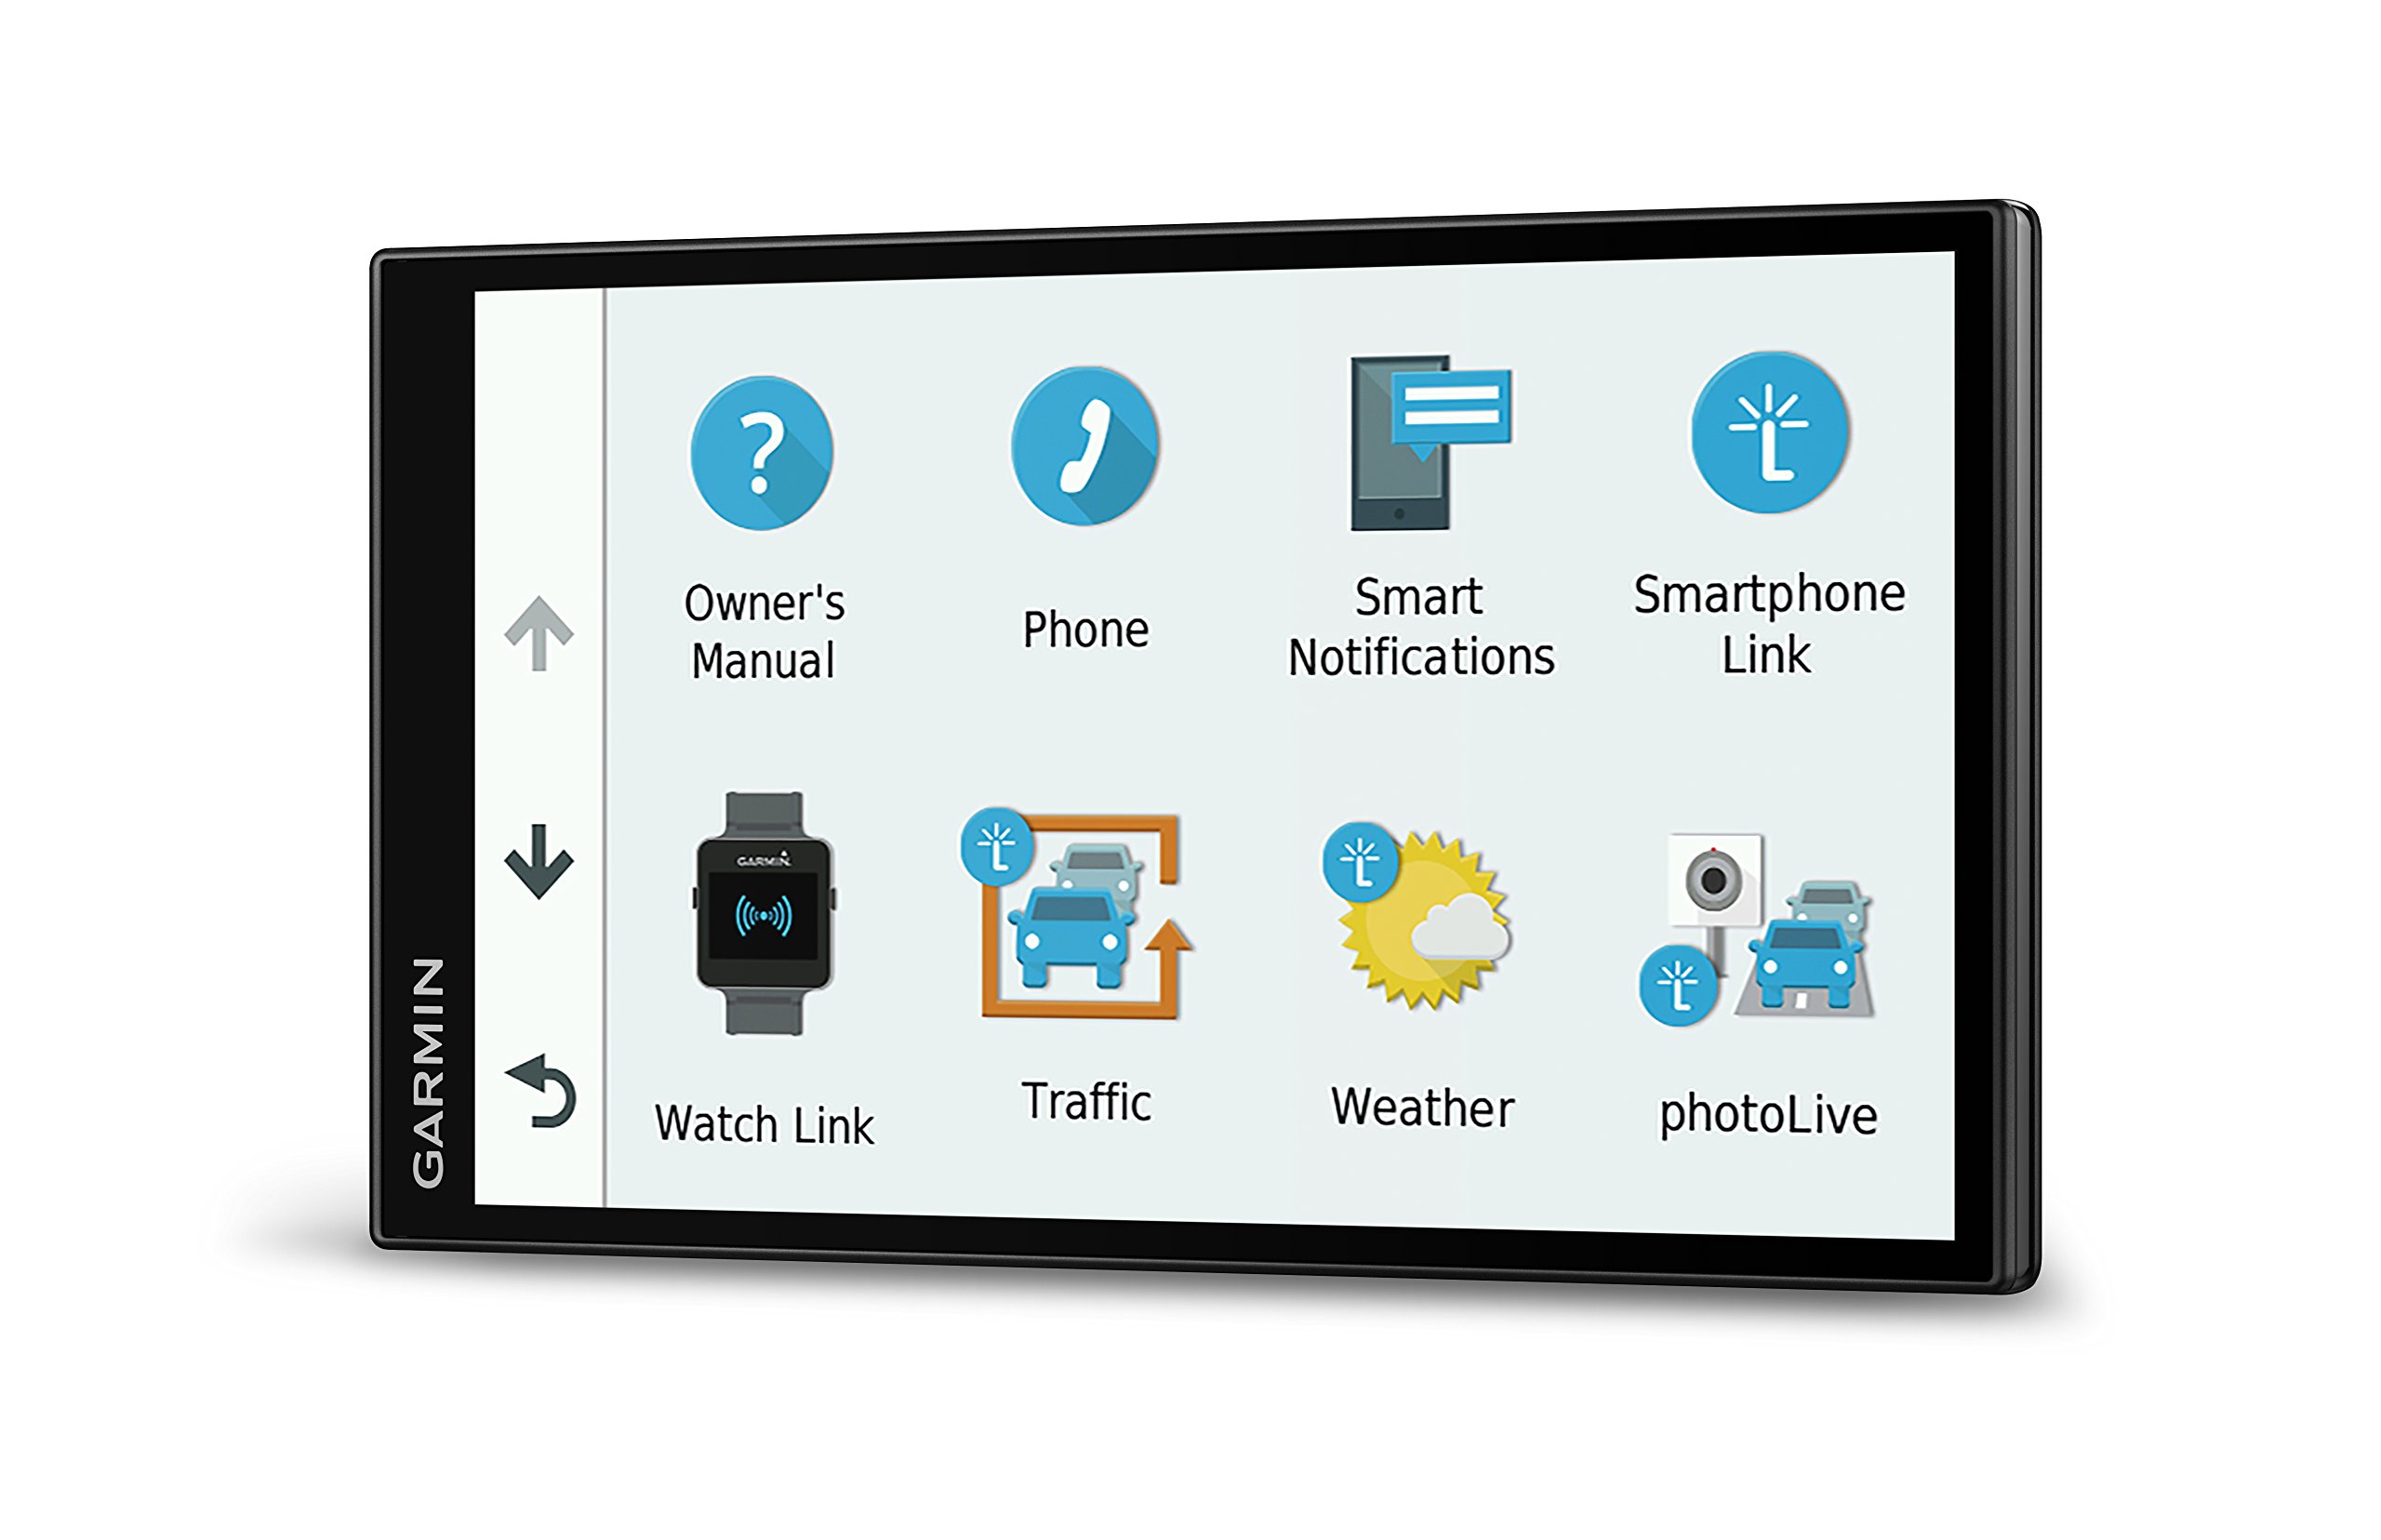 Garmin DriveSmart 61 NA LMT-S with Lifetime Maps/Traffic, Live Parking, Bluetooth,WiFi, Smart Notifications, Voice Activation, Driver Alerts, TripAdvisor, Foursquare